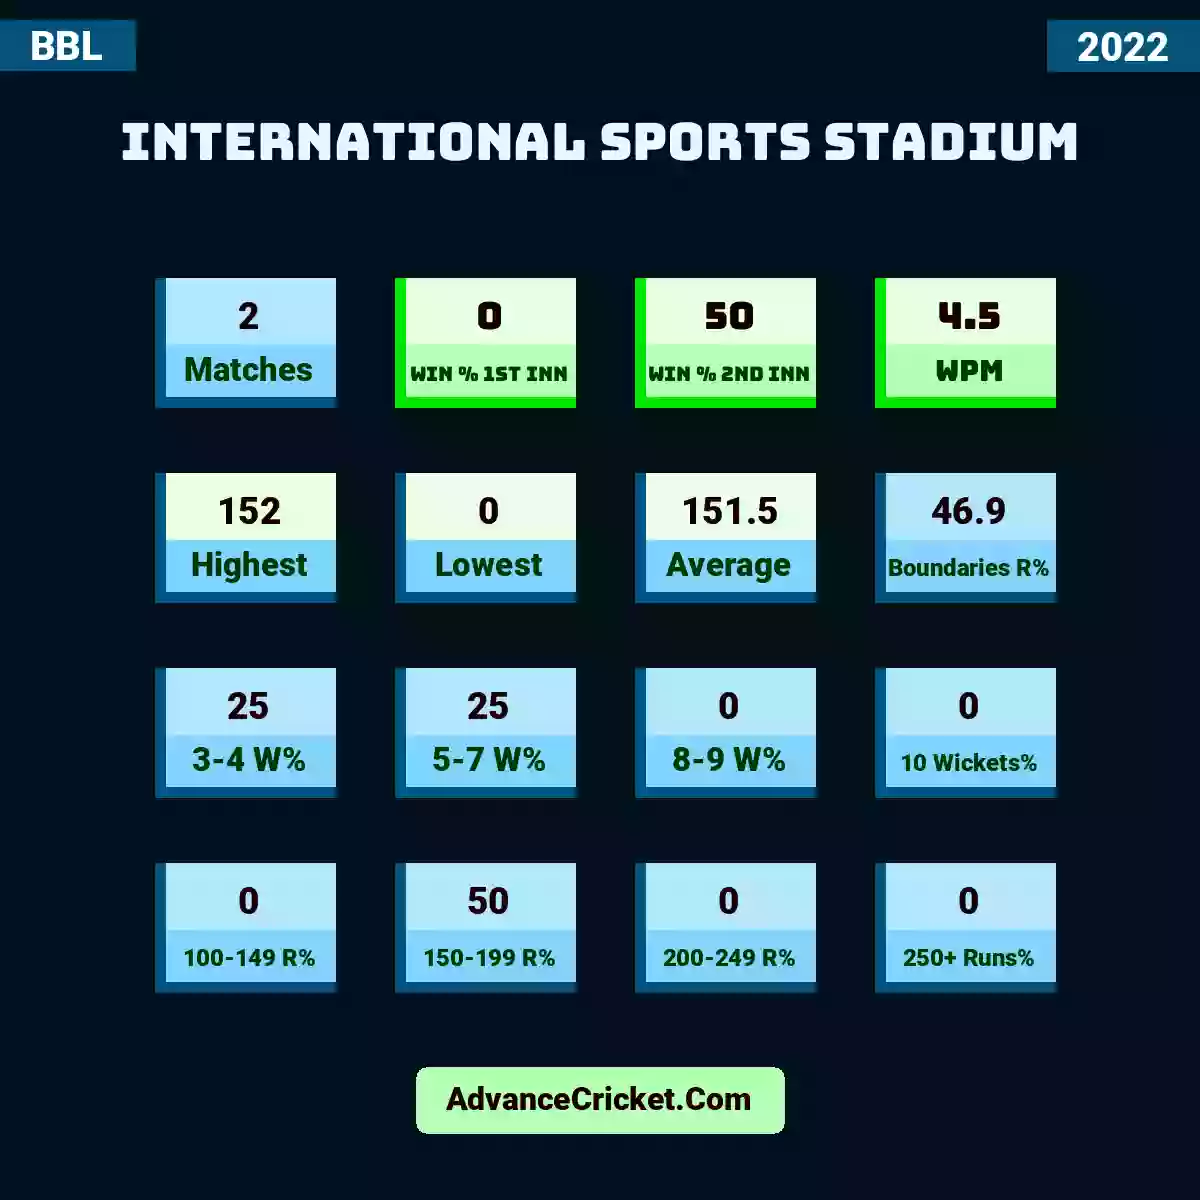 Image showing International Sports Stadium with Matches: 2, Win % 1st Inn: 0, Win % 2nd Inn: 50, WPM: 4.5, Highest: 152, Lowest: 0, Average: 151.5, Boundaries R%: 46.9, 3-4 W%: 25, 5-7 W%: 25, 8-9 W%: 0, 10 Wickets%: 0, 100-149 R%: 0, 150-199 R%: 50, 200-249 R%: 0, 250+ Runs%: 0.